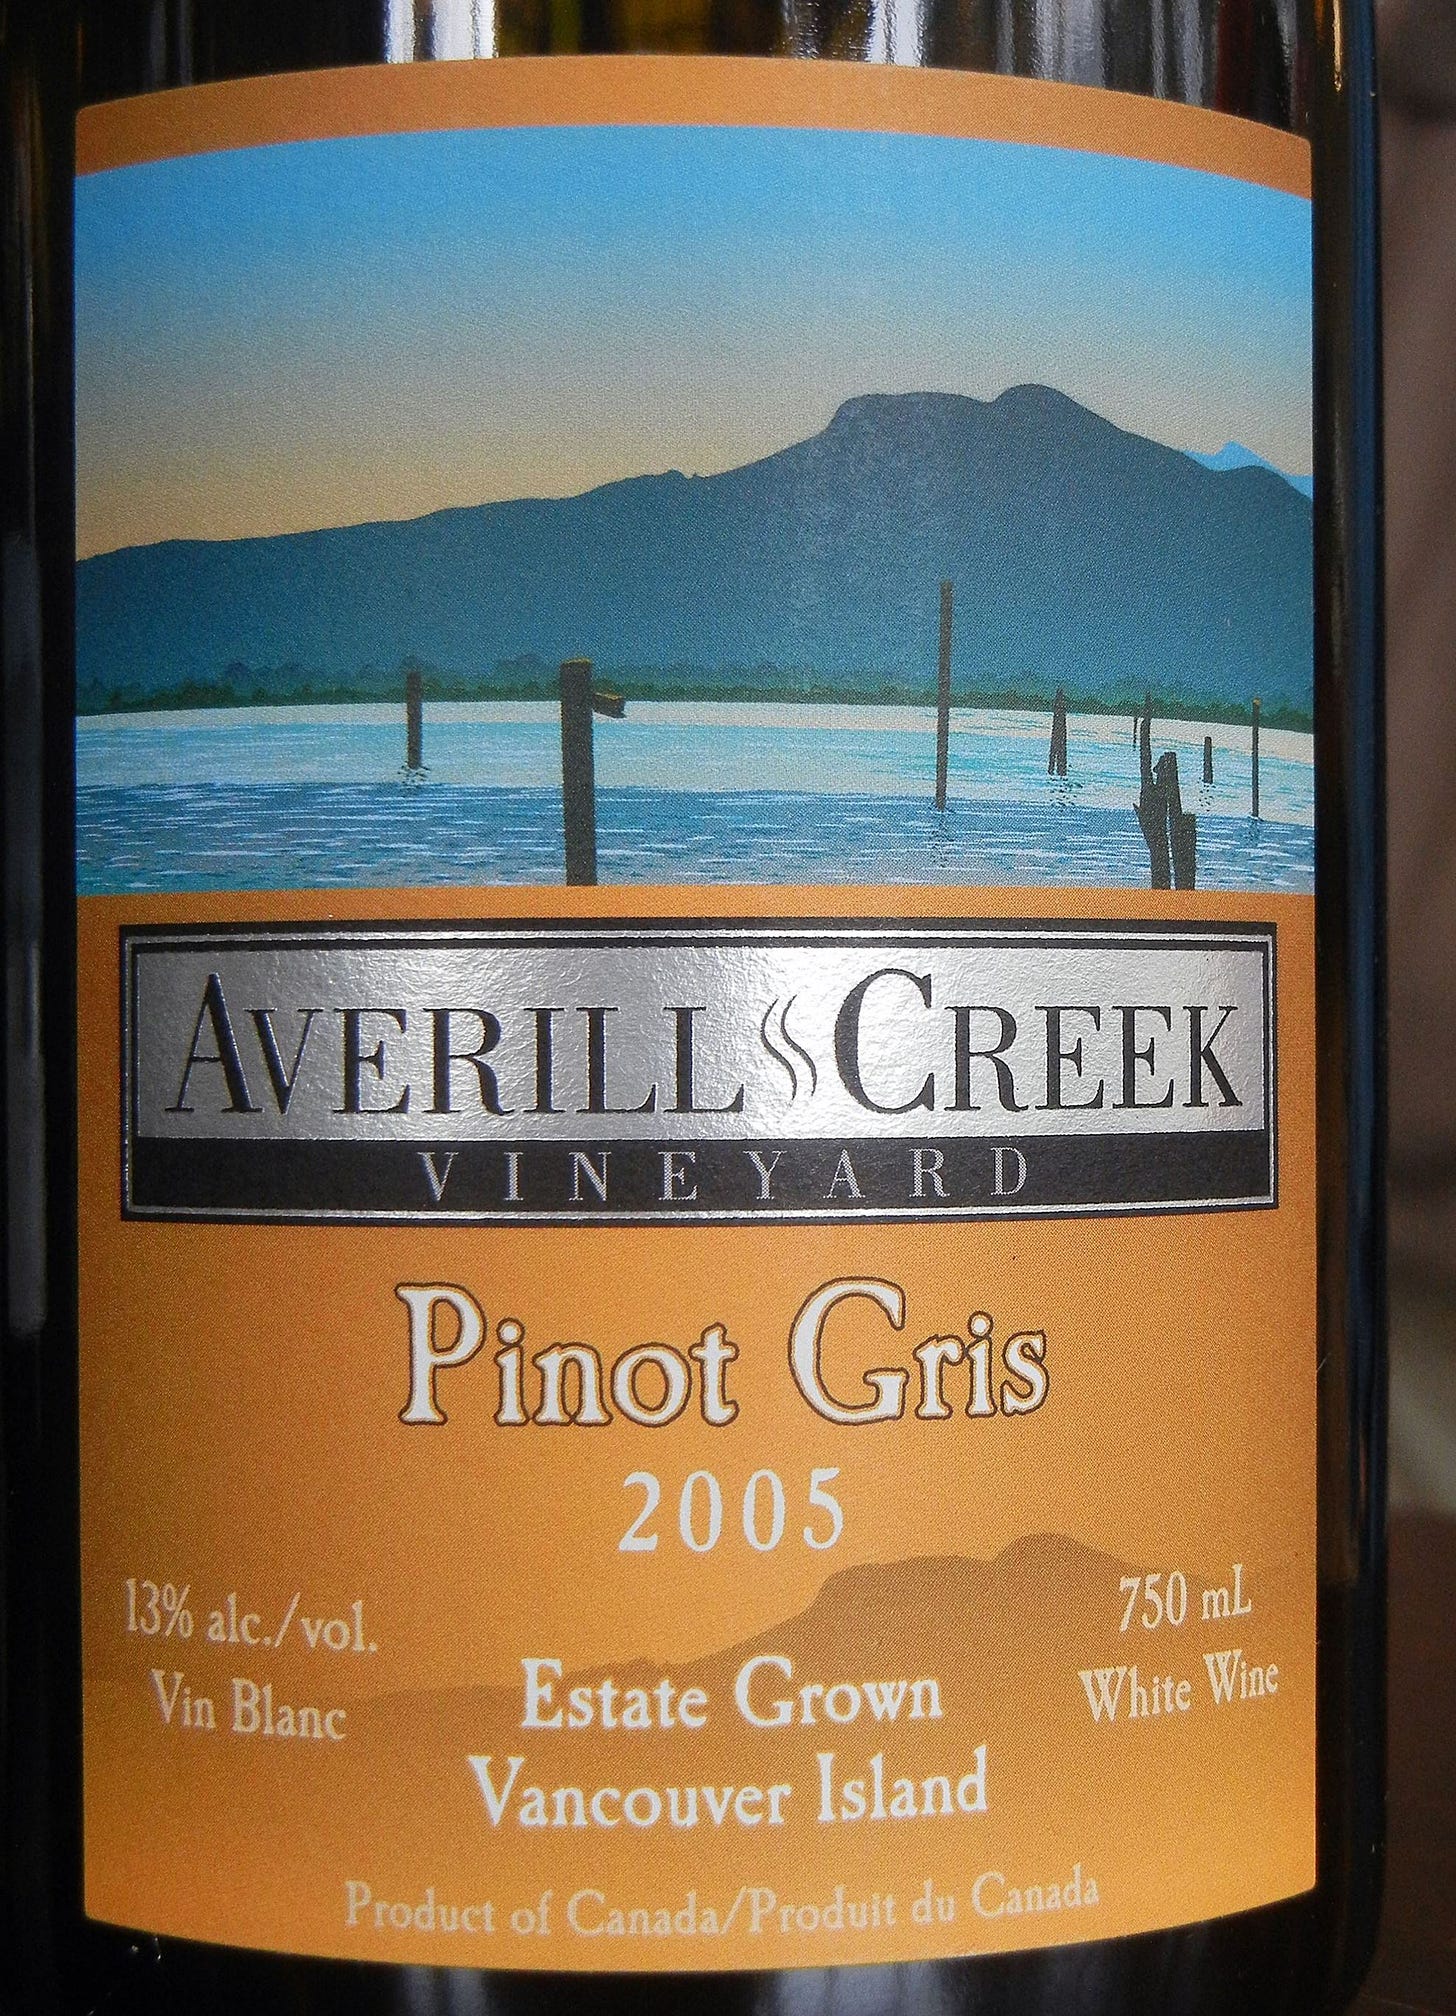 Averill Creek Pinot Gris 2005 Label - BC Pinot Noir Tasting Review 24 